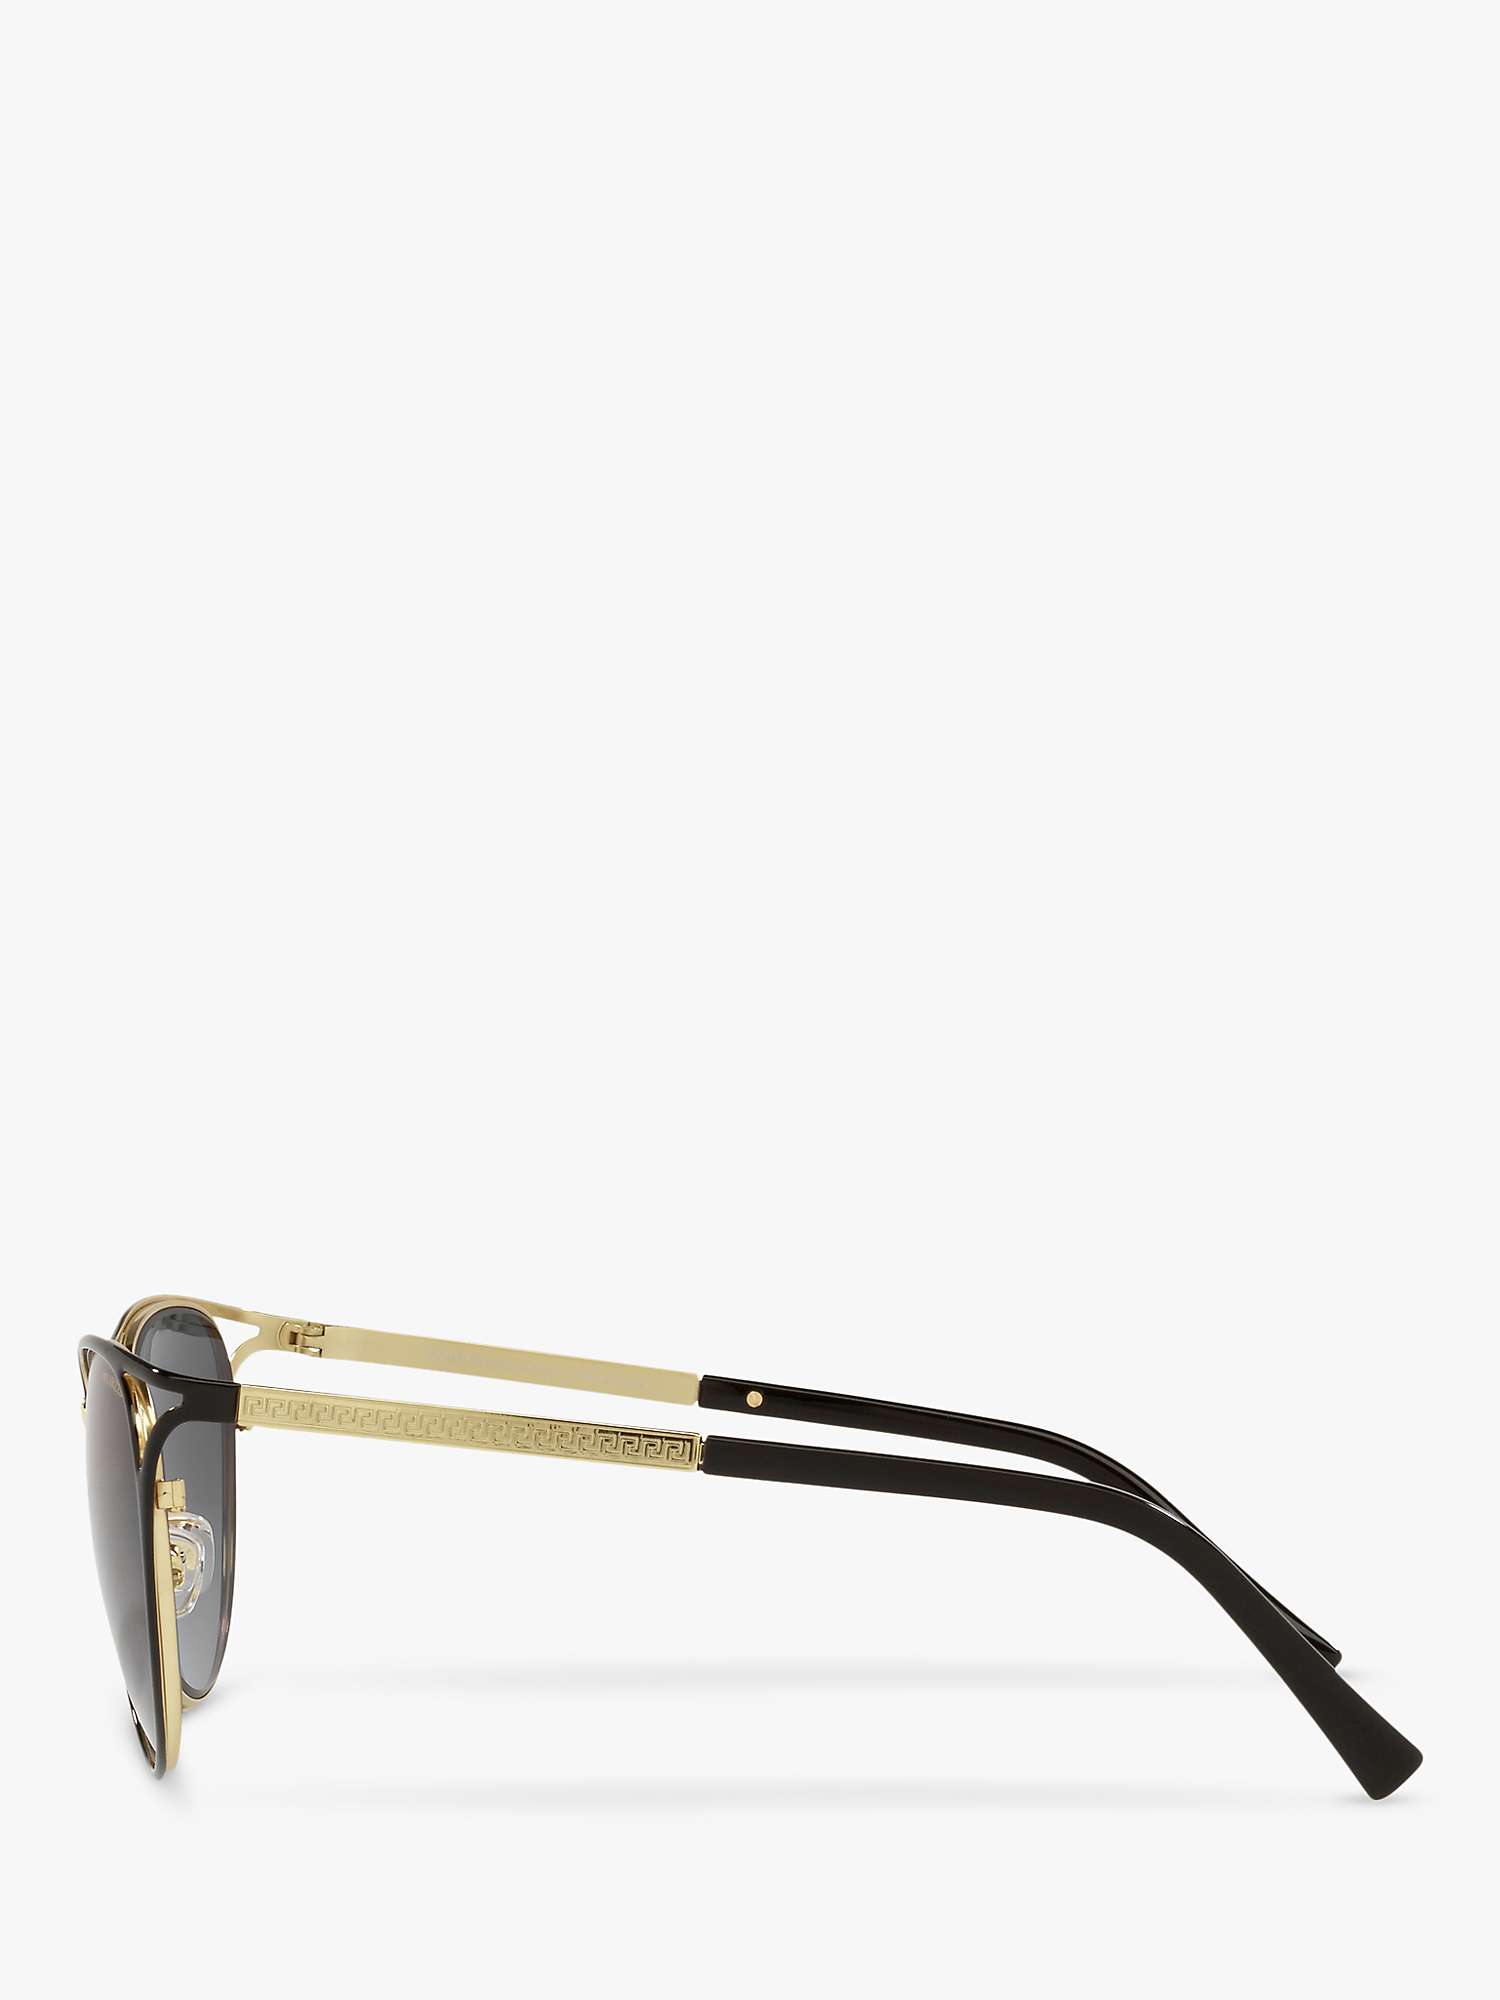 Buy Versace VE2237 Women's Cat's Eye Polarised Sunglasses, Black/Gold Online at johnlewis.com